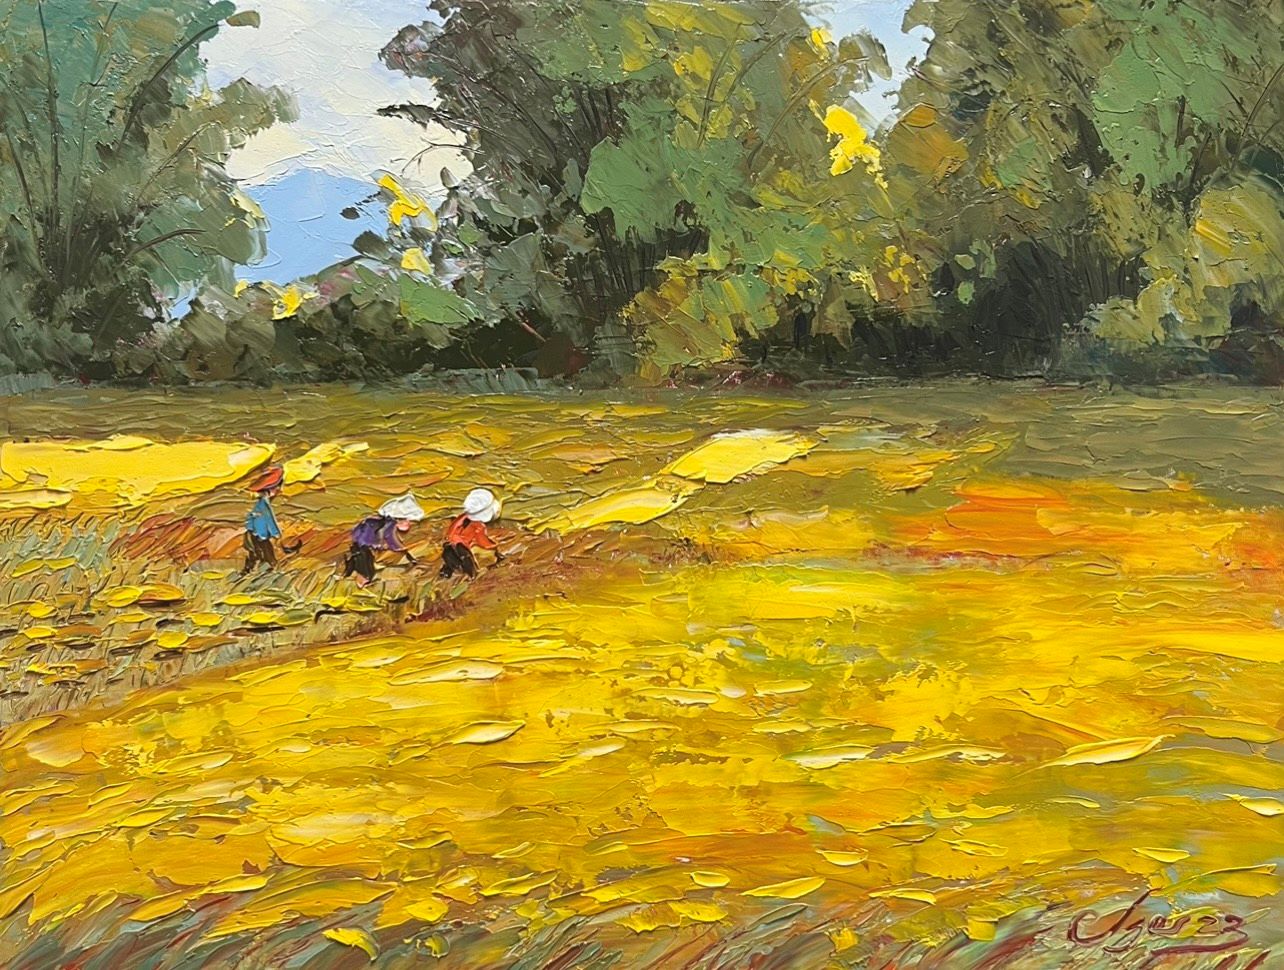 Golden Season II - Vietnamese Oil Painting by Artist Dang Dinh Ngo